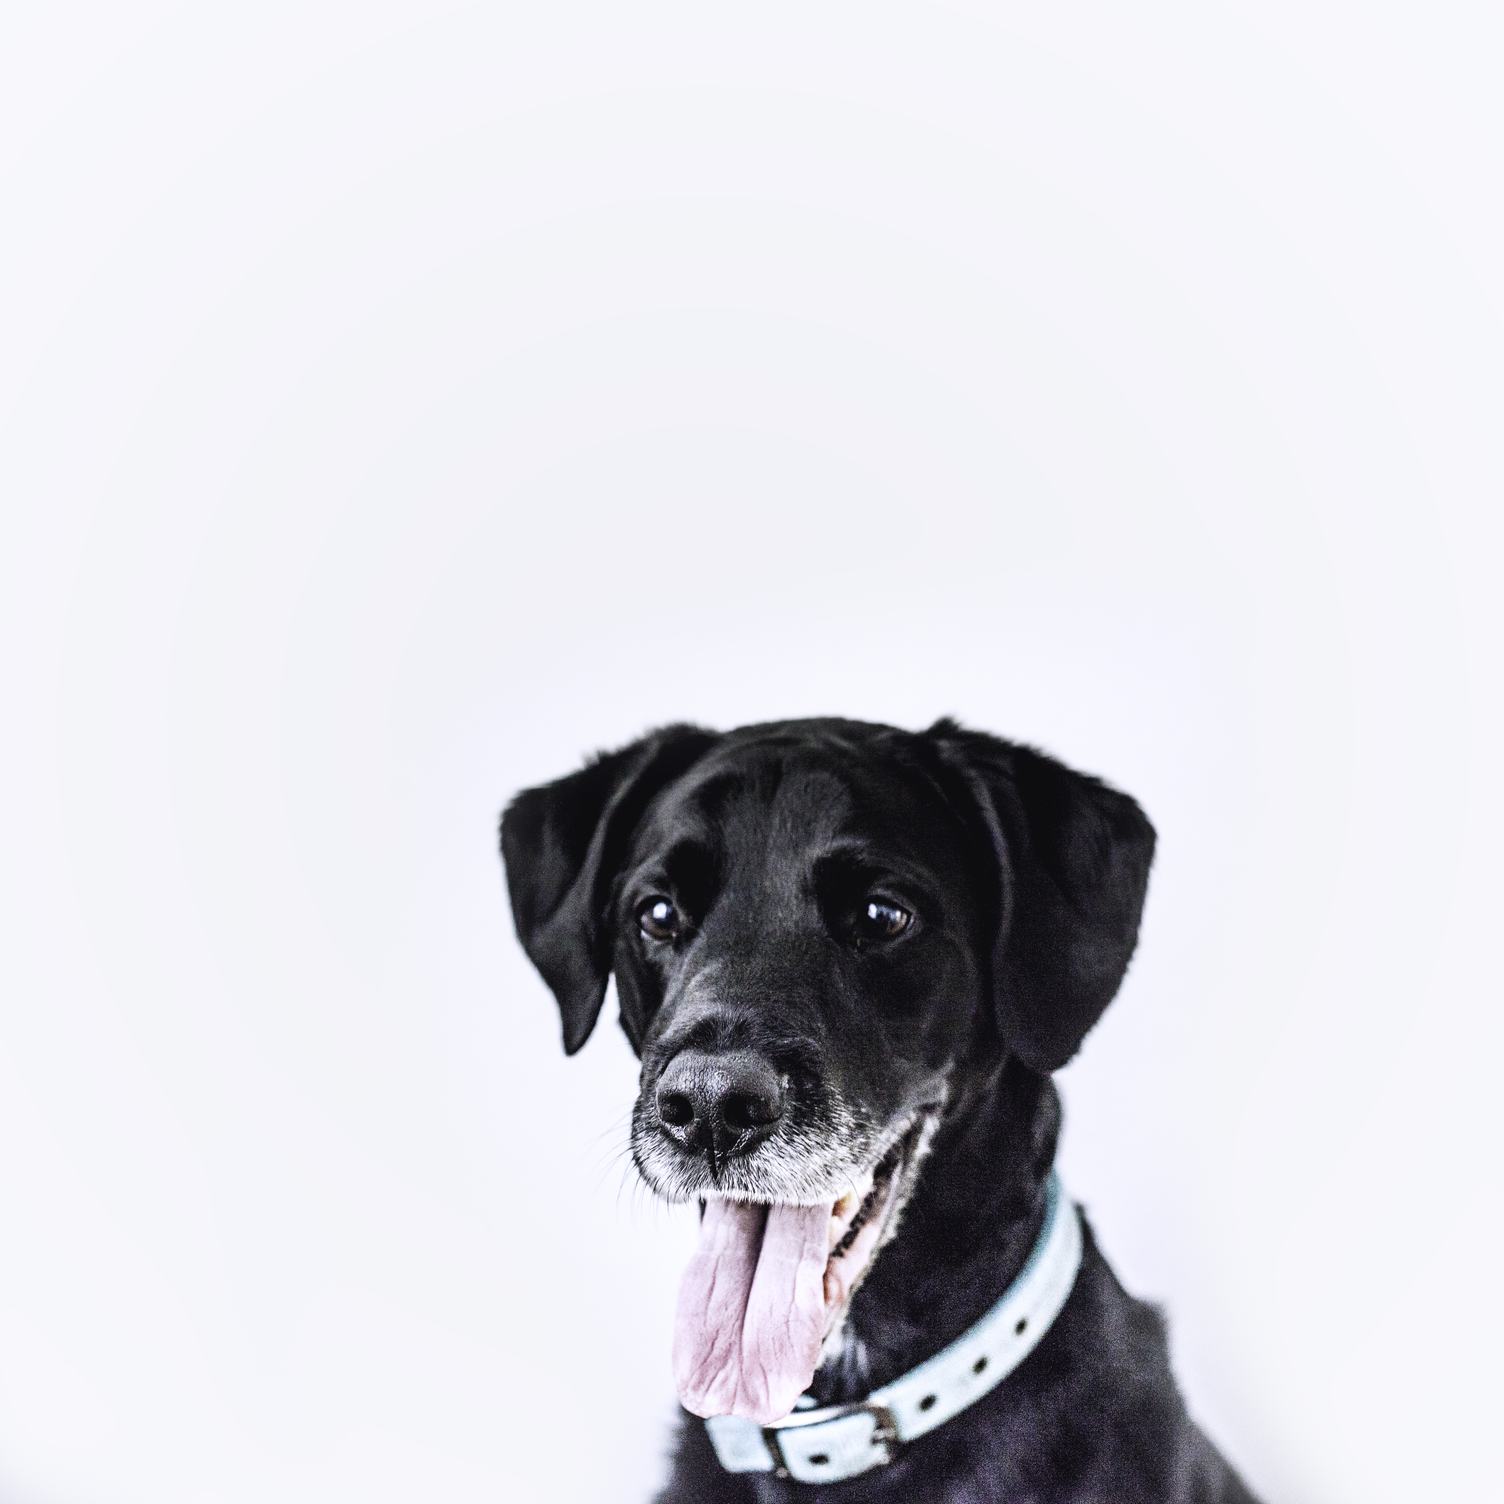 Portrait of a Black Dog on White Background